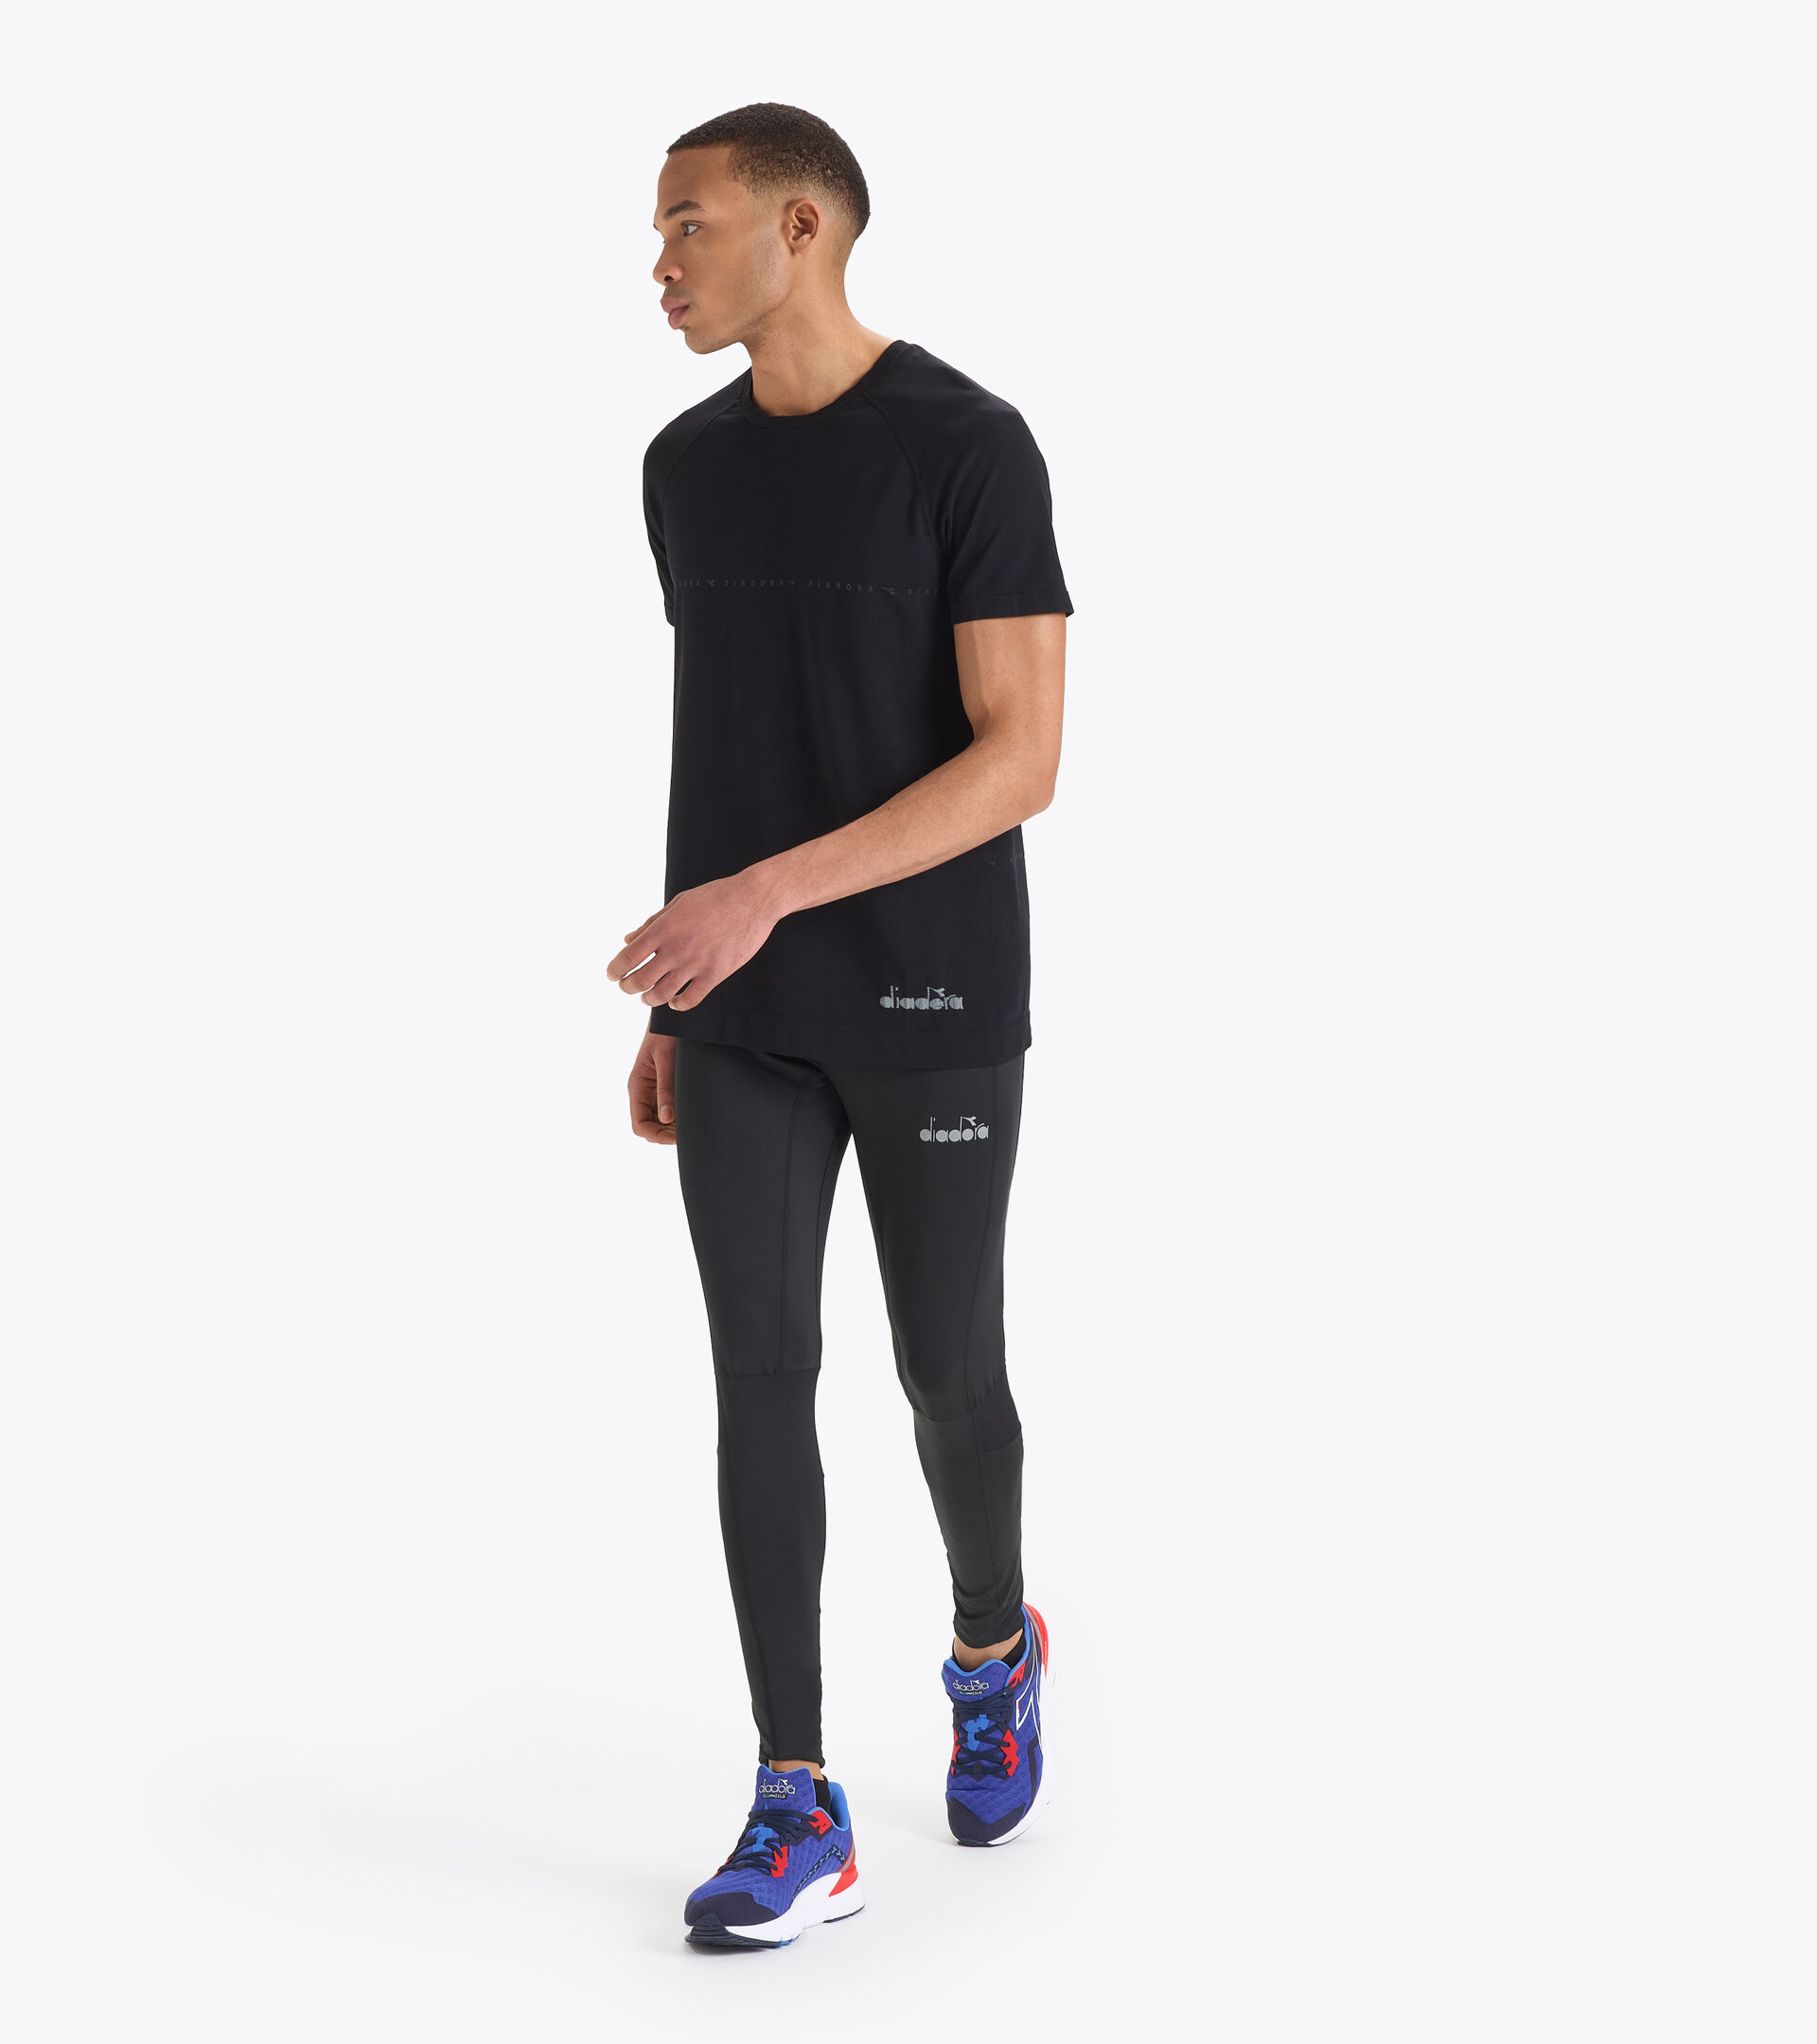 Men's Basic Running Tights - Black